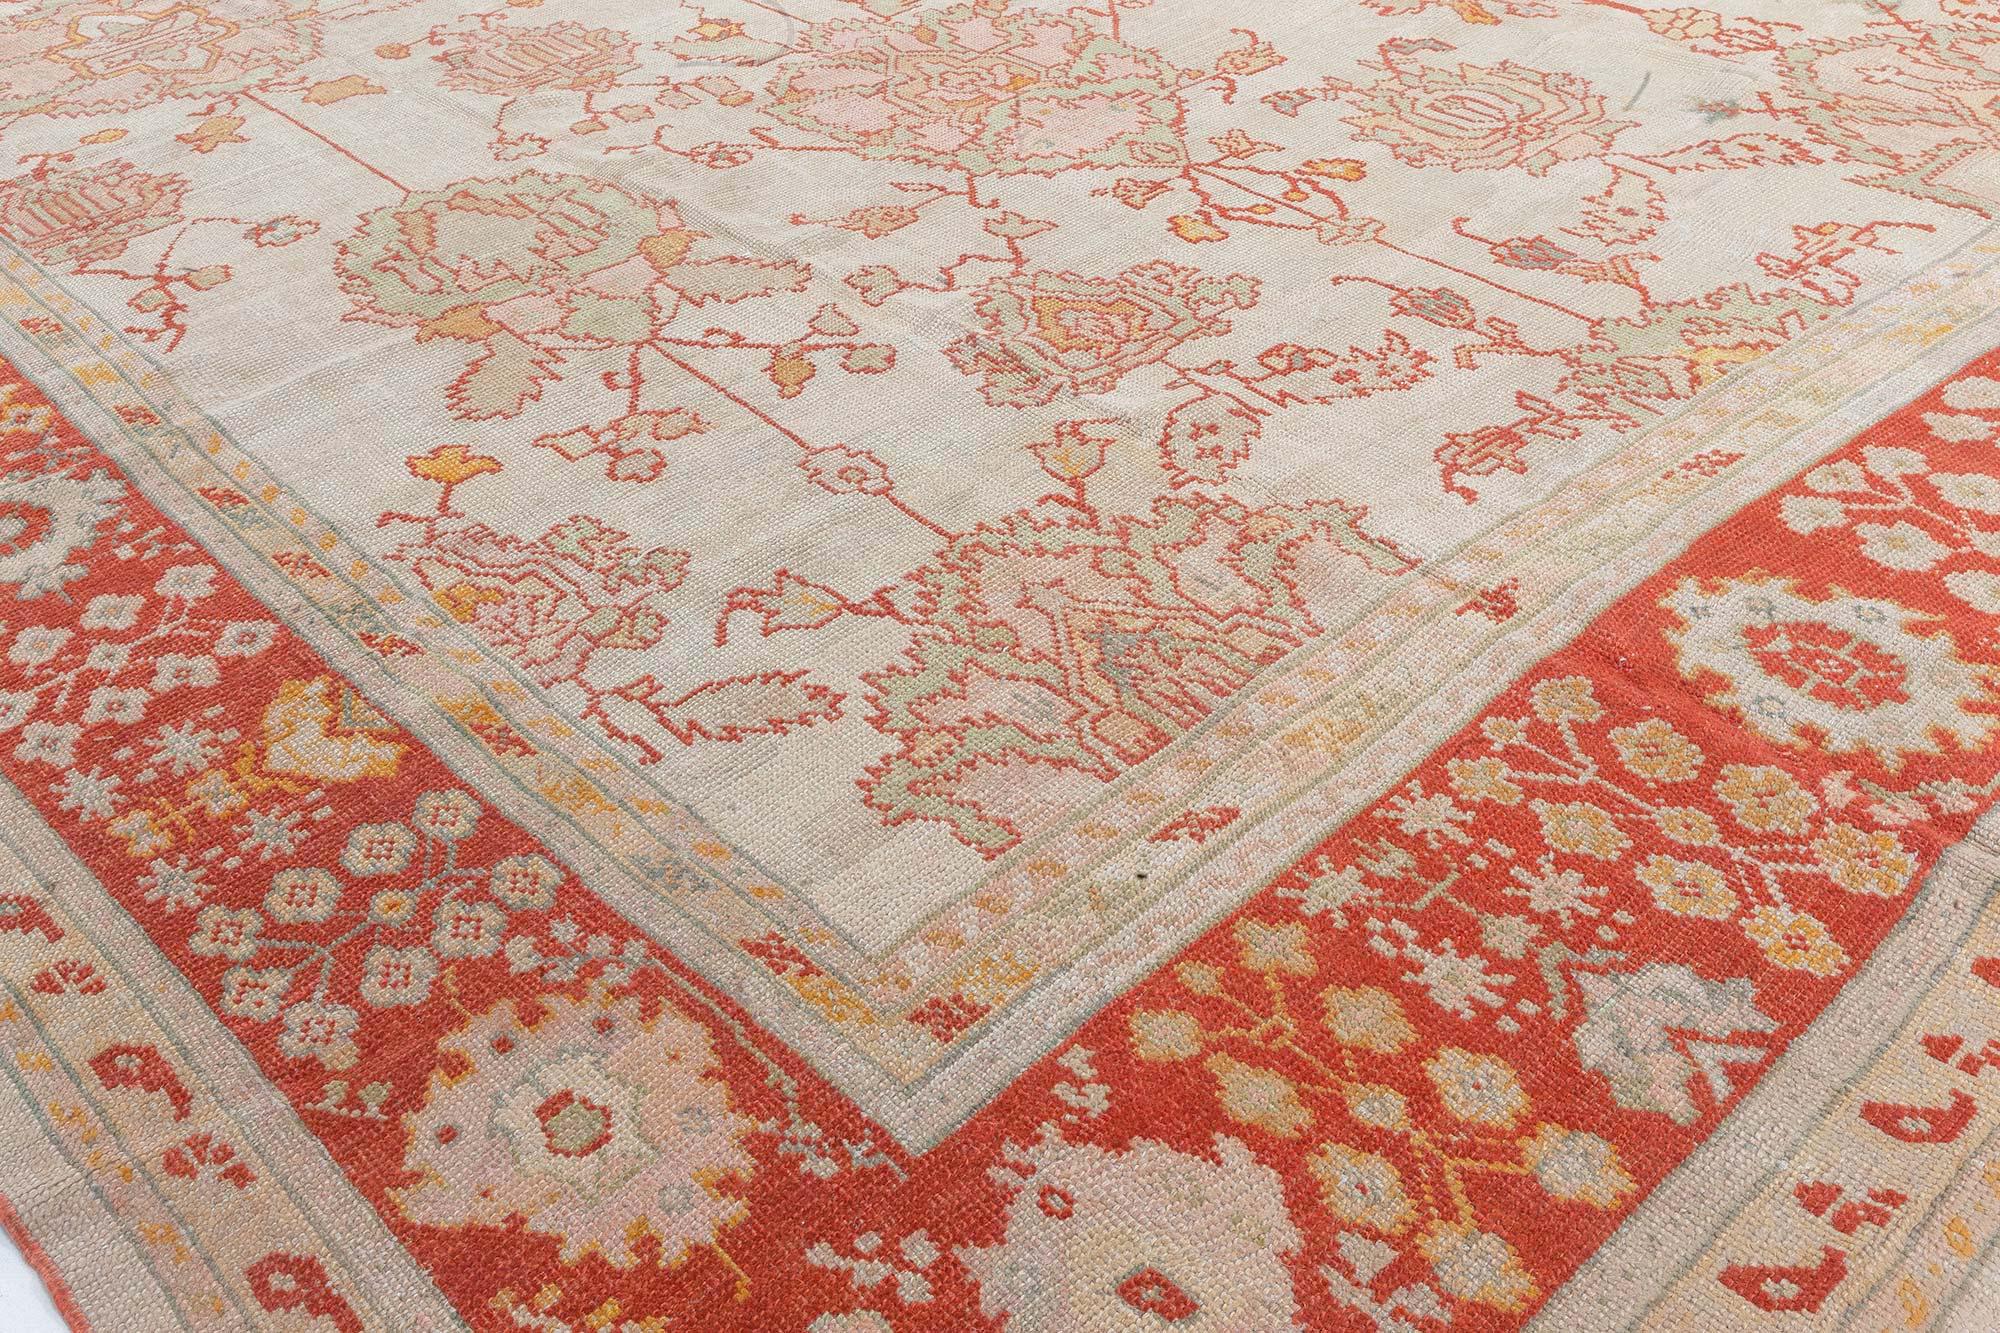 Antique Turkish Oushak Beige Handwoven Wool Carpet For Sale 1